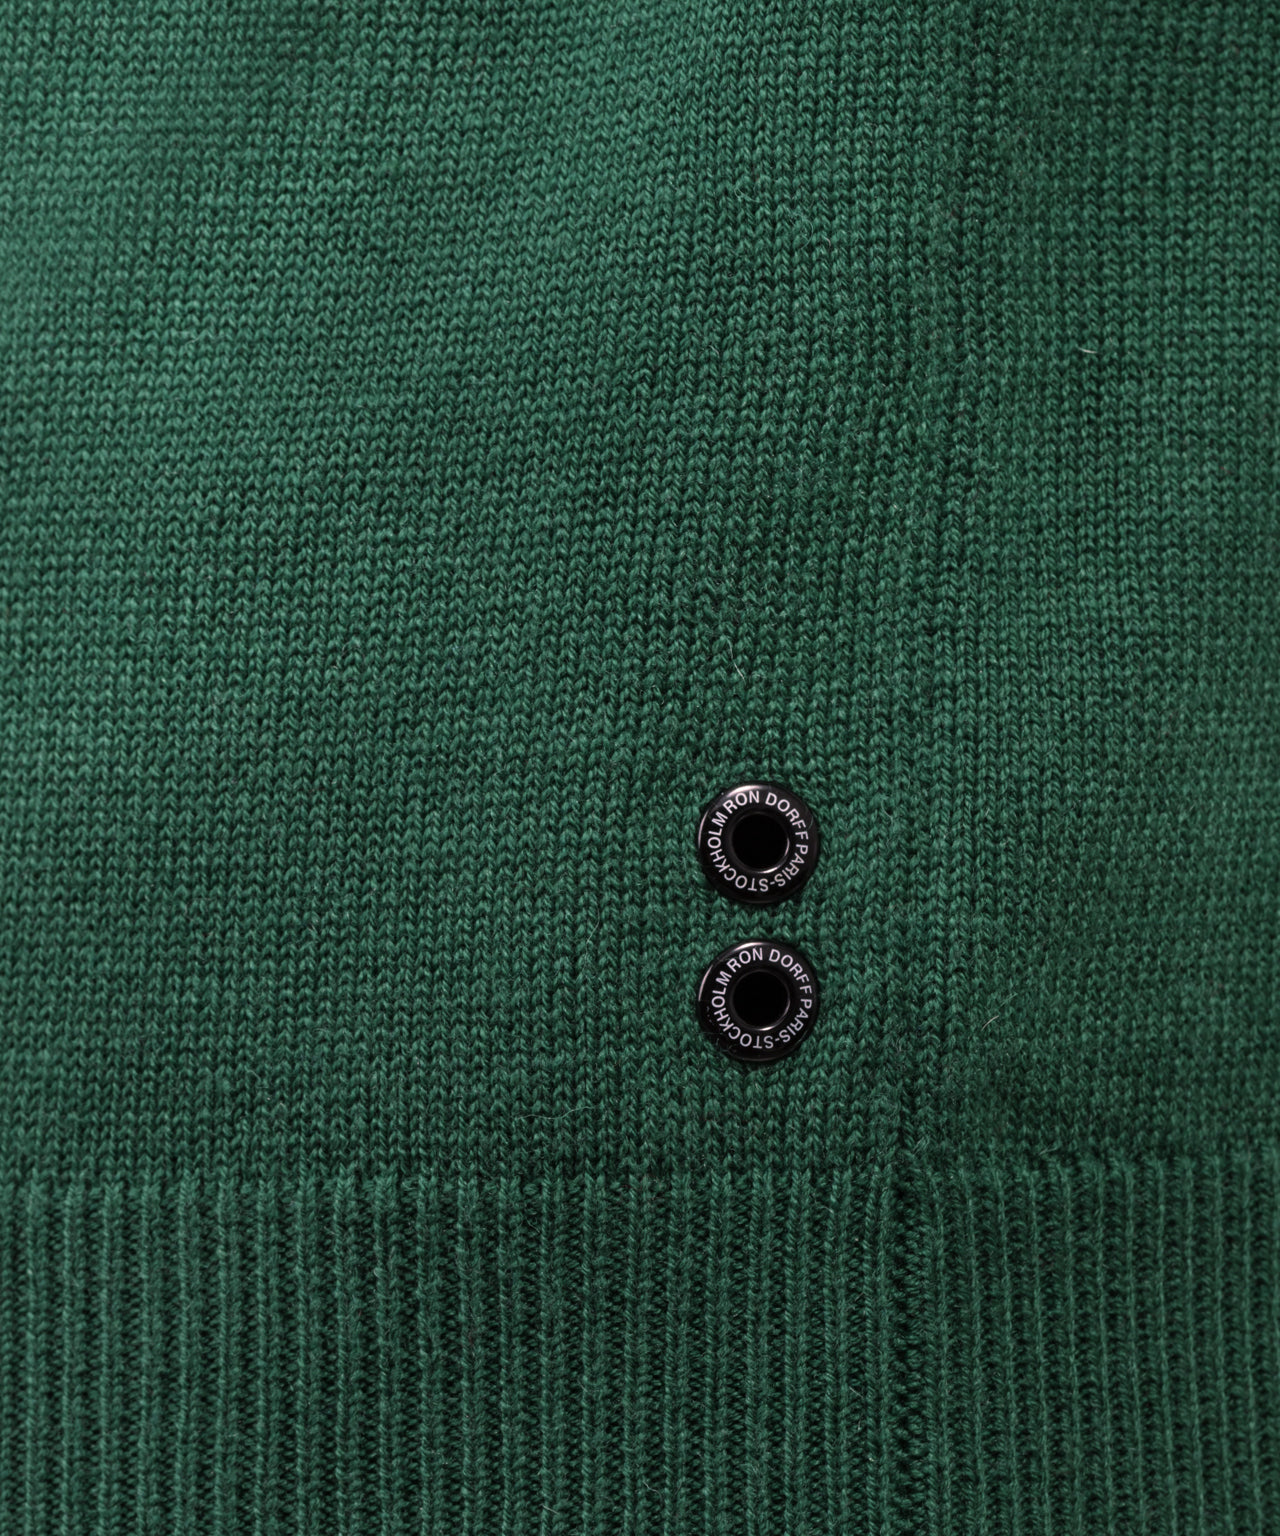 Cotton-Wool RON DORFF Sweater: Chalet Green